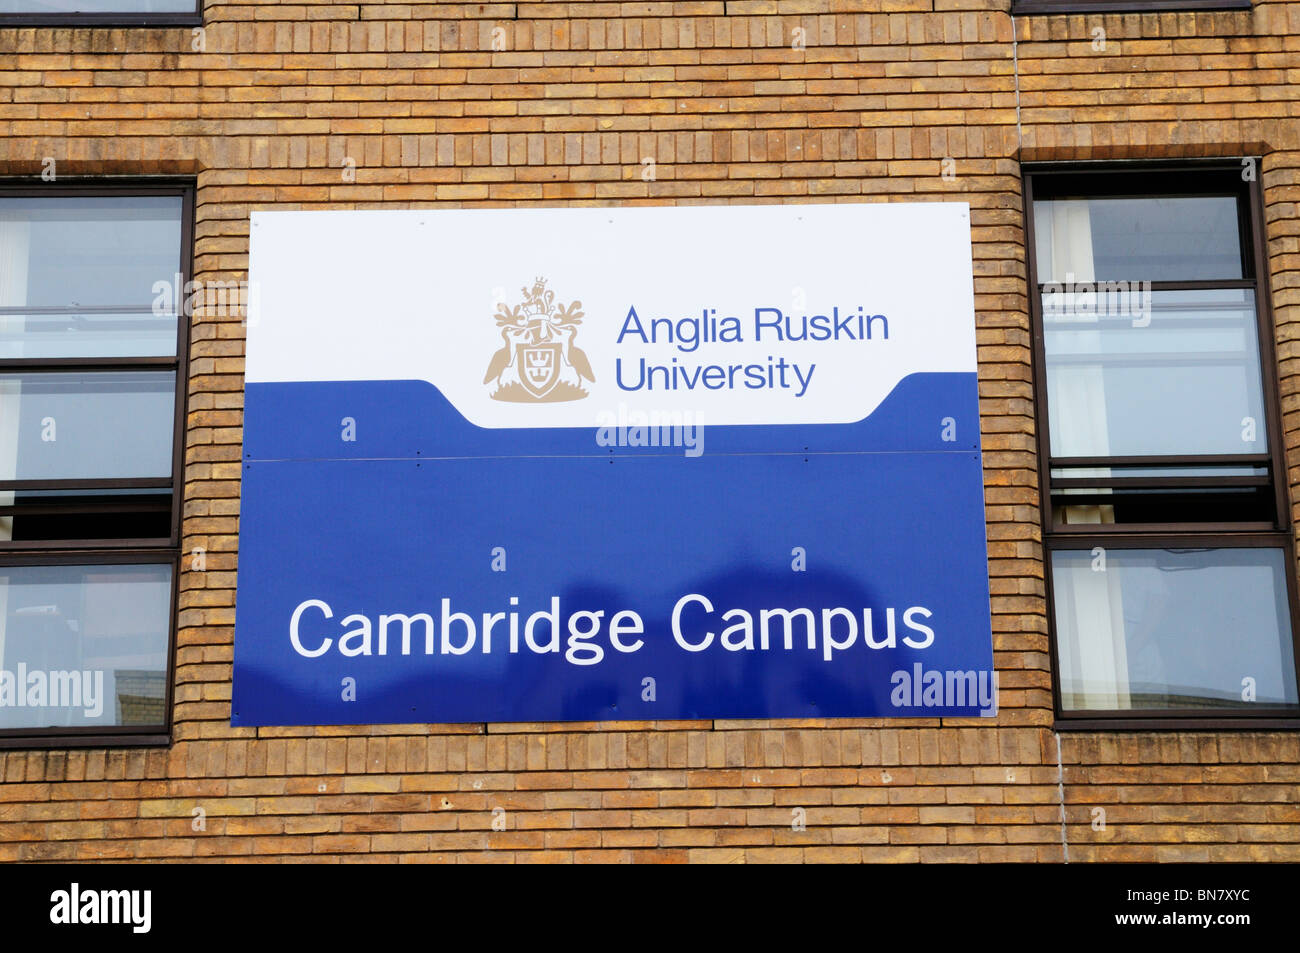 Anglia Ruskin University Cambridge Campus sign, East Road, Cambridge, England, UK Stock Photo